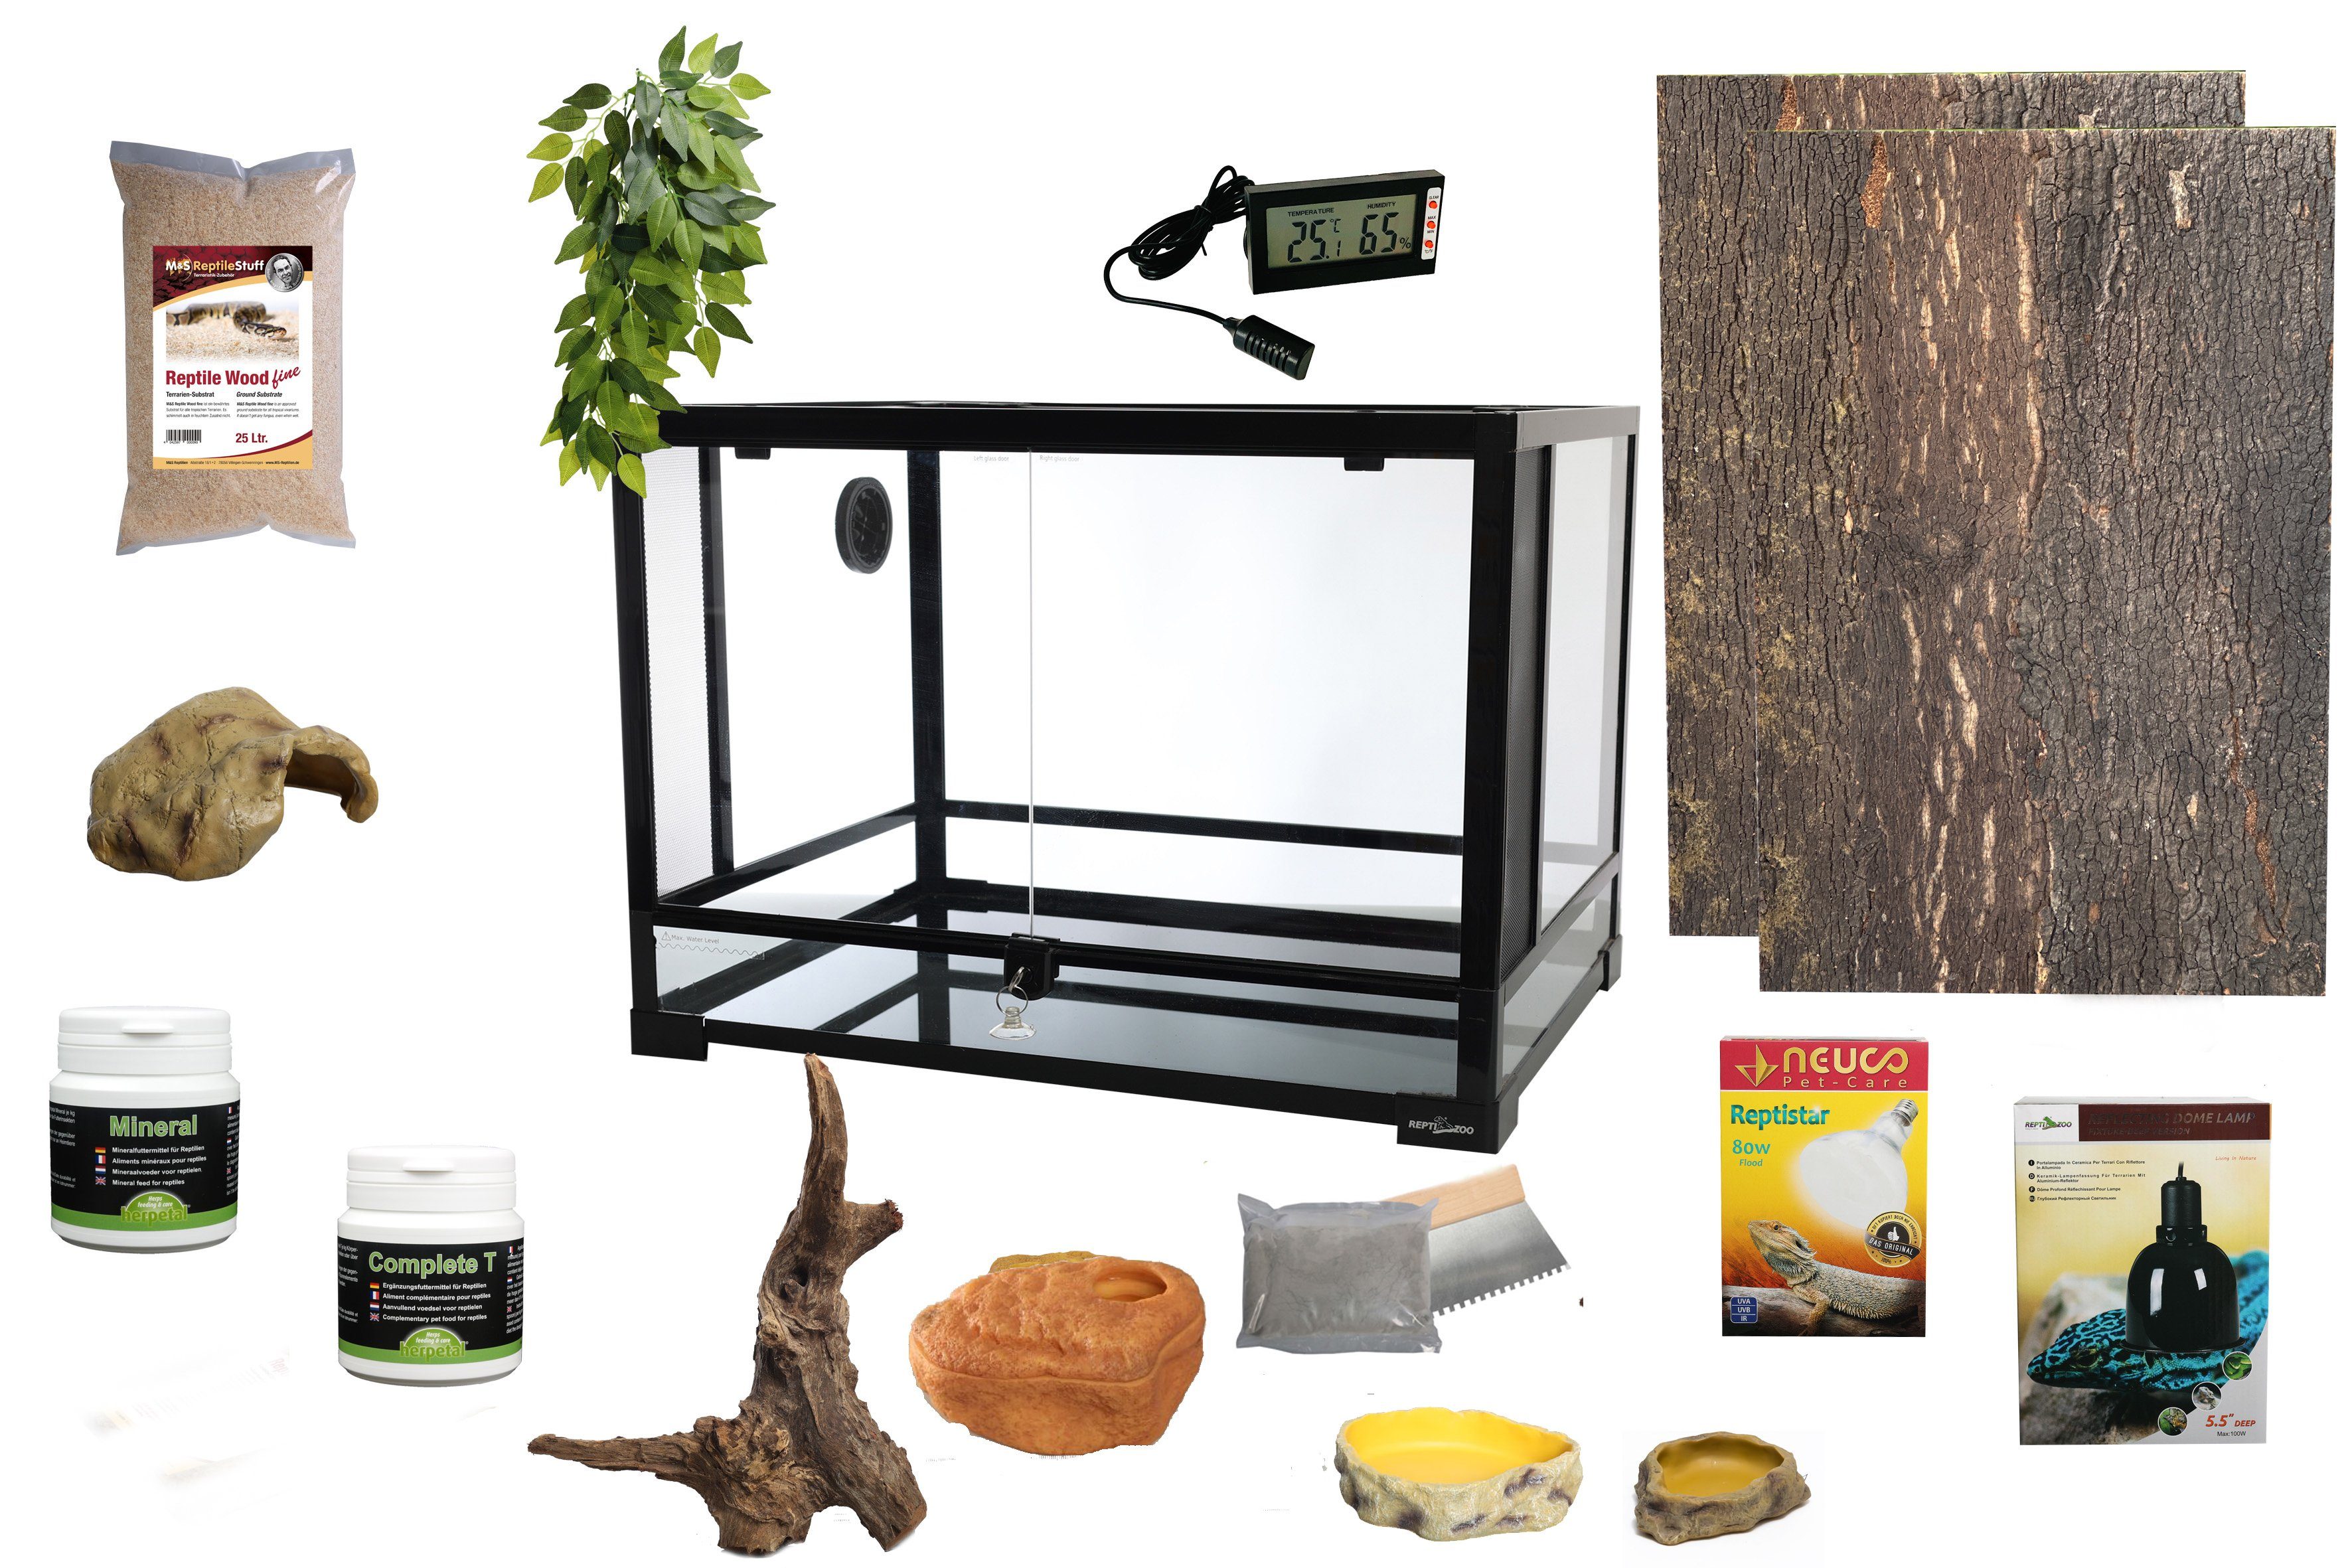 M&S Reptilien Terrarium Komplettset: Für Chamäleons